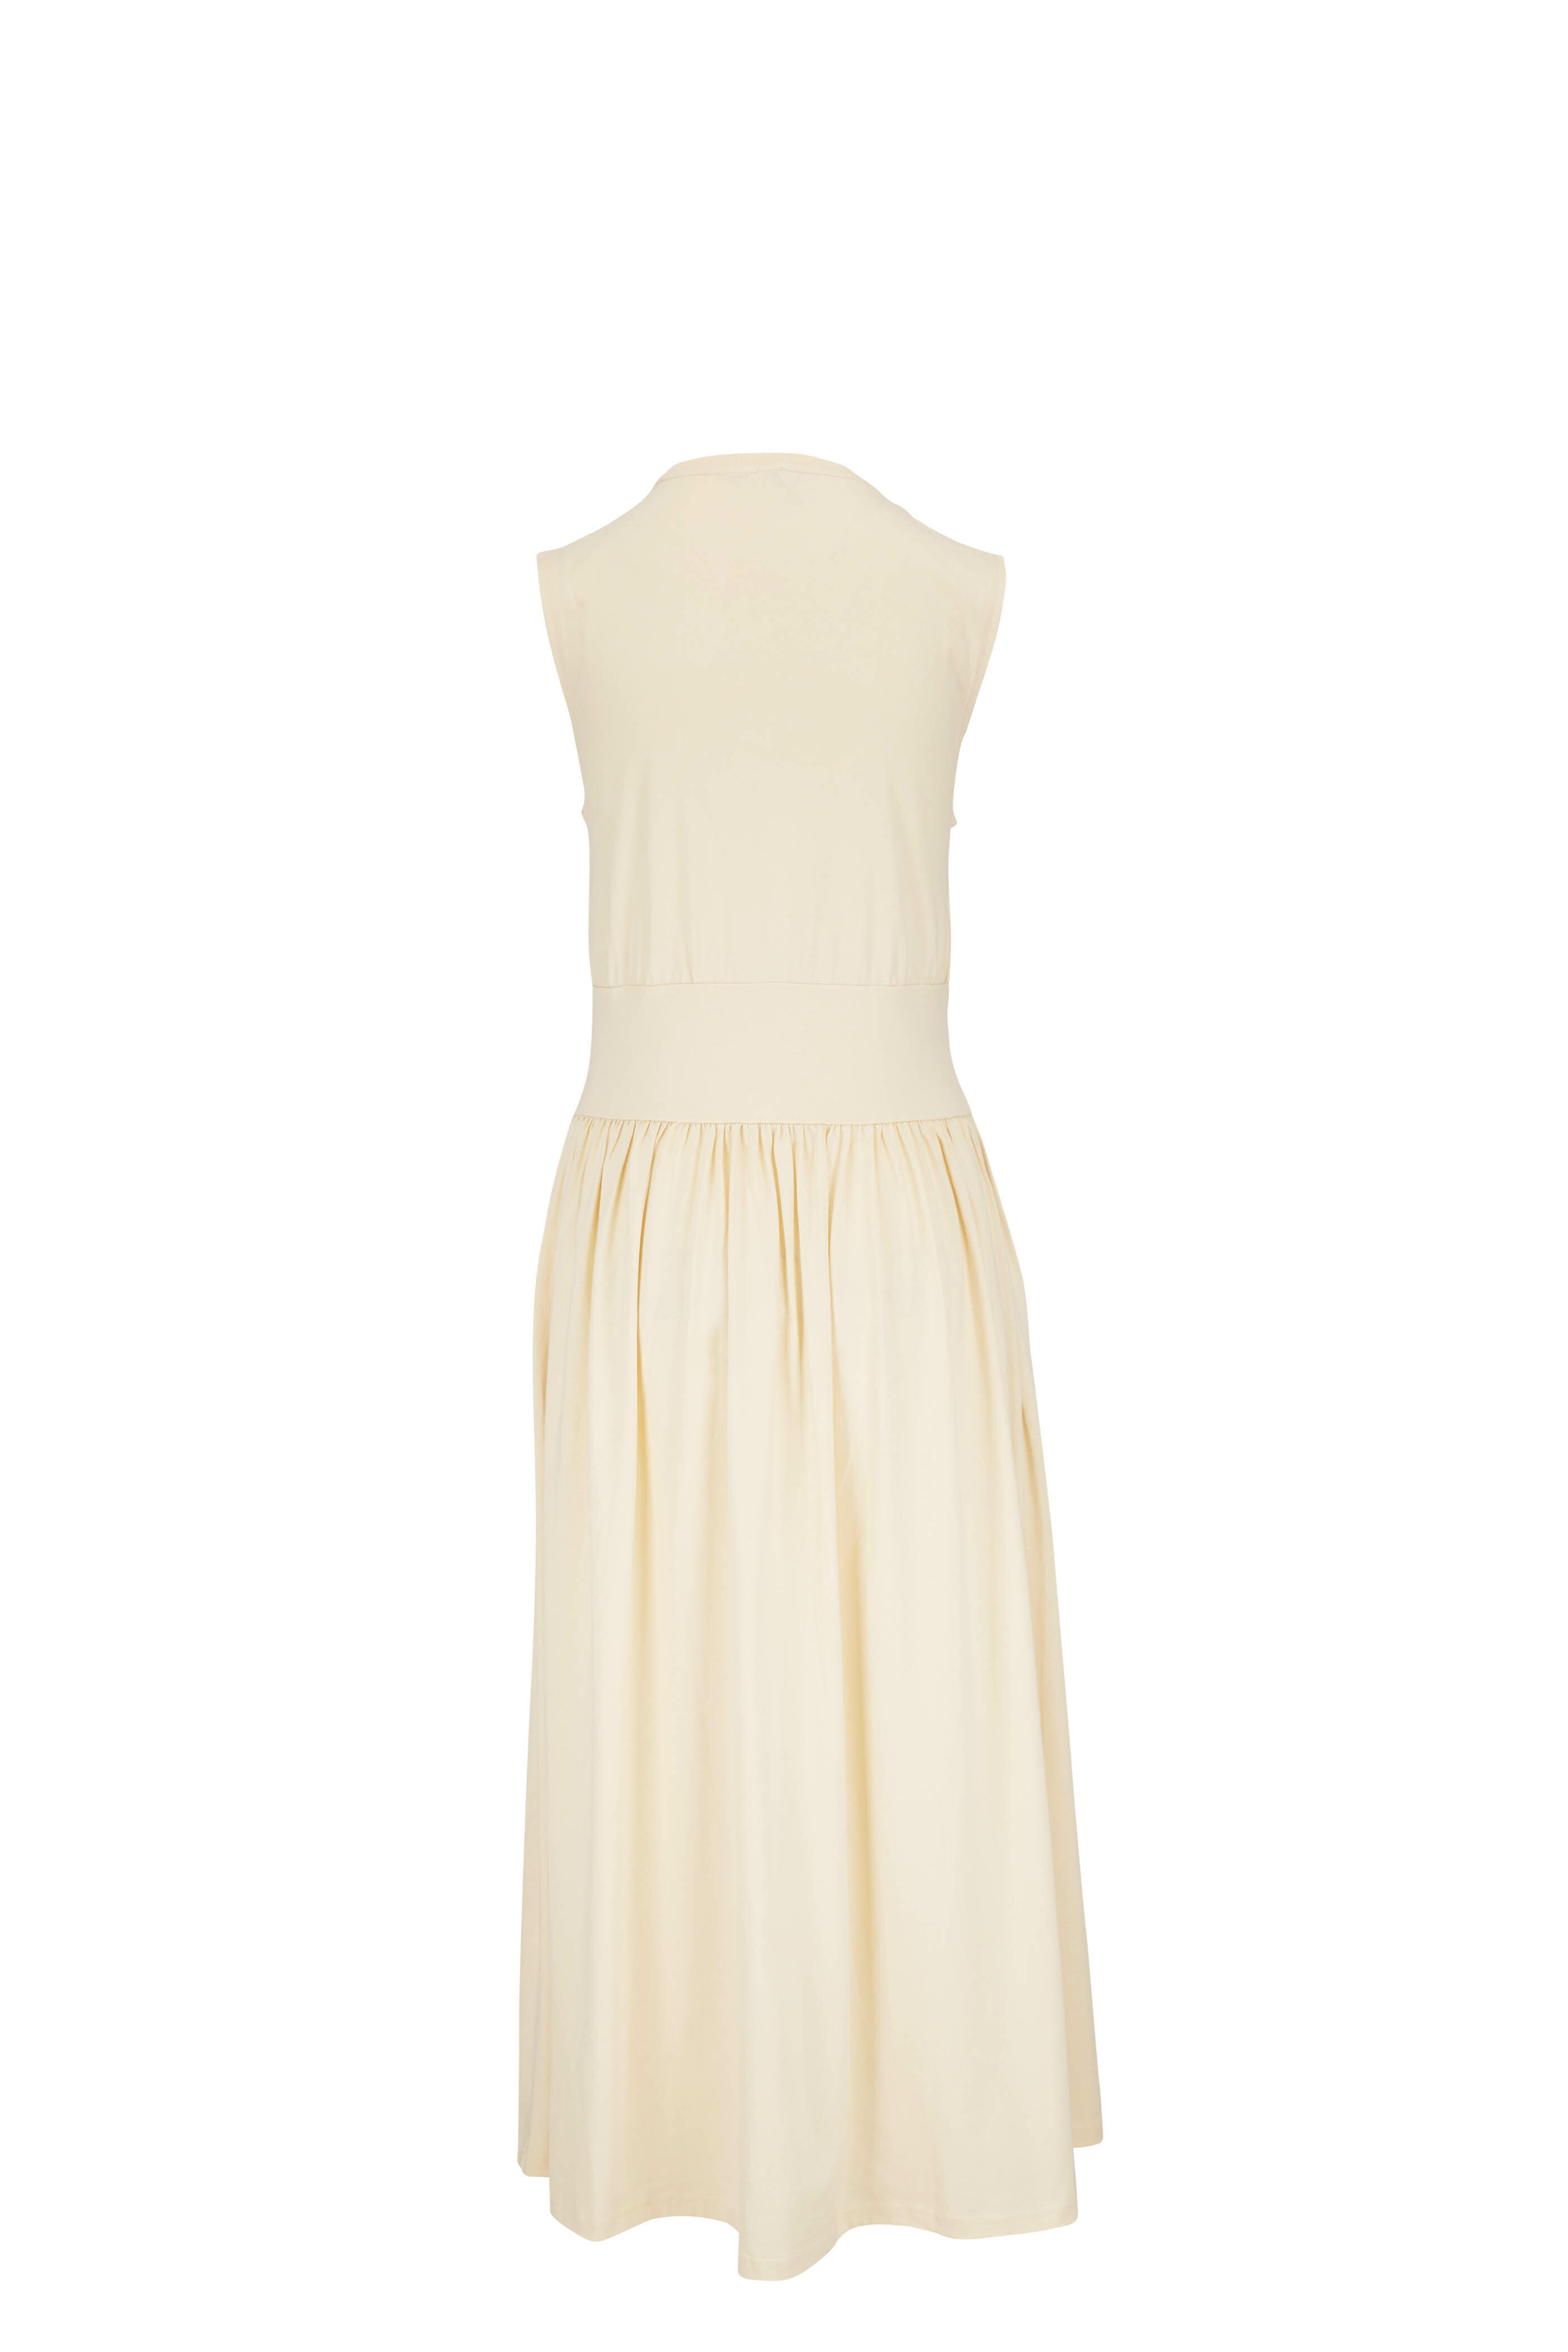 Totême - Vanilla Sleeveless Cotton Sleeveless Dress